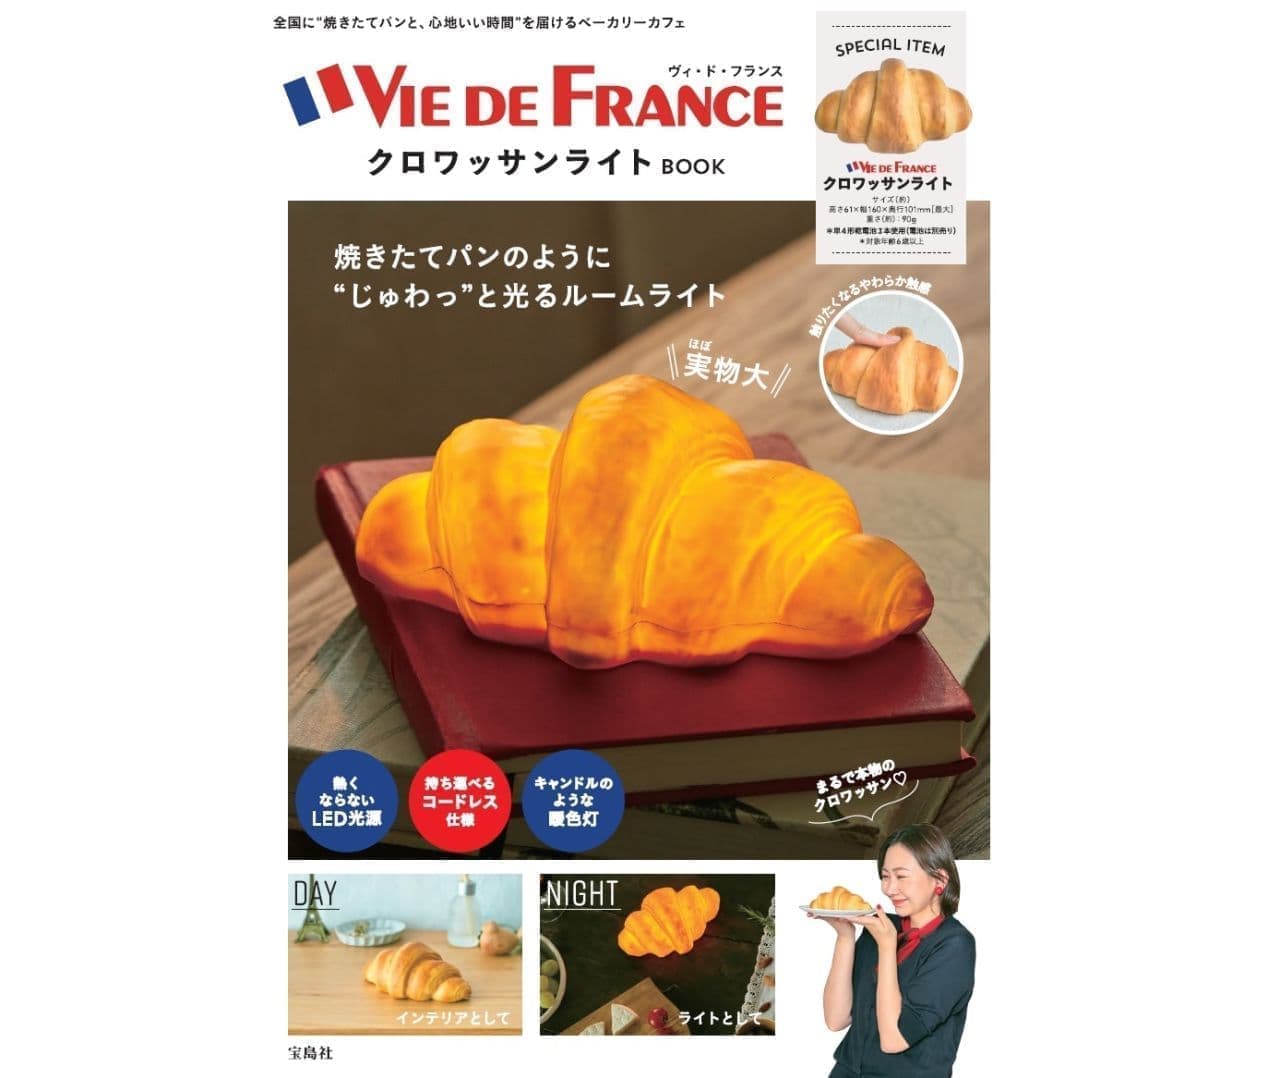 VIE DE FRANCE Croissant Light Book" by Takarajimasya